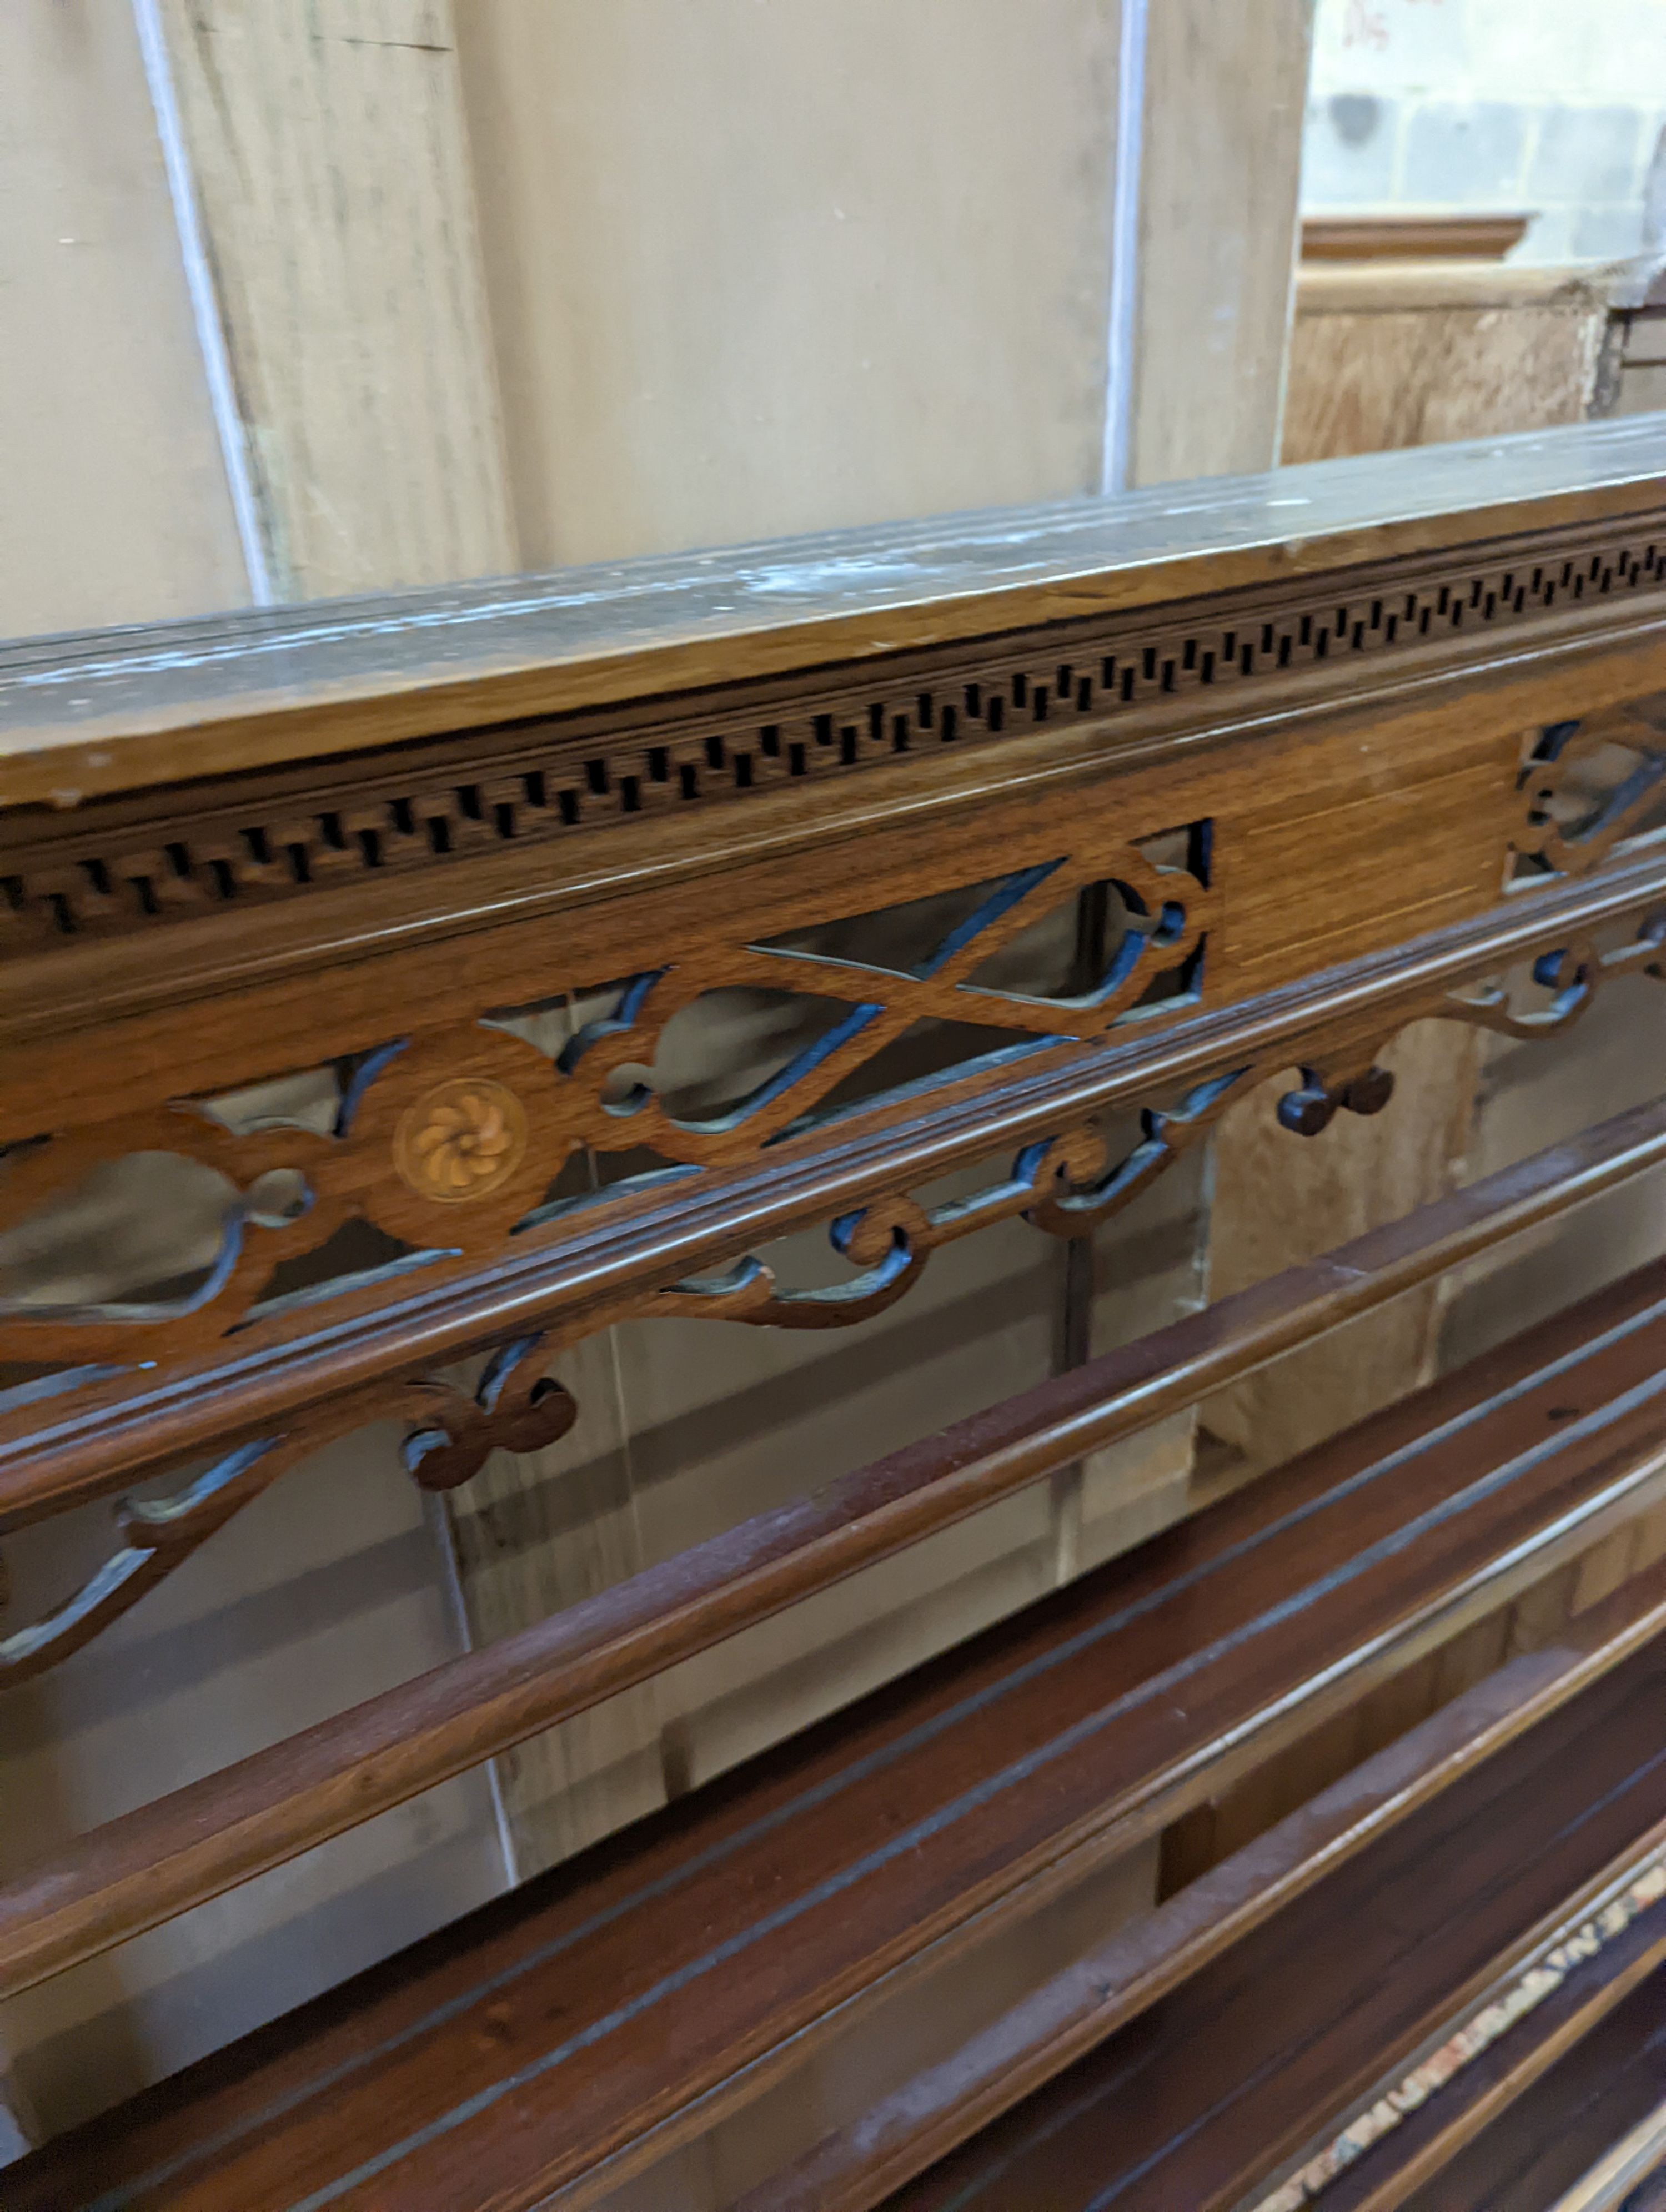 A George III style inlaid mahogany plate rack, width 135cm, depth 17cm, height 119cm